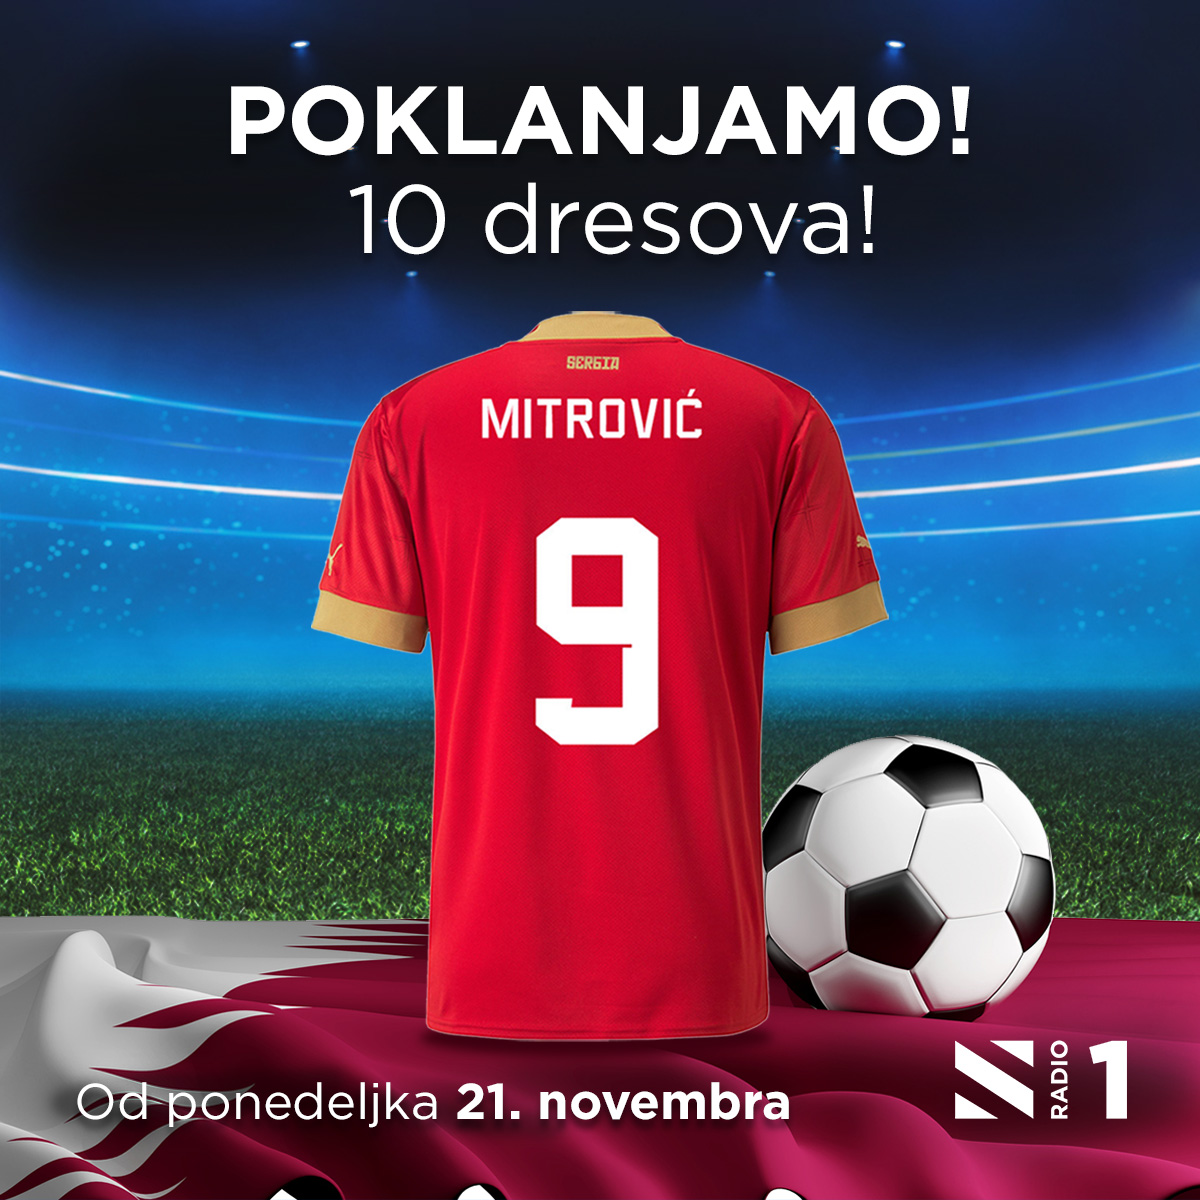 Poklanjamo 10 Mitrovićevih dresova! 